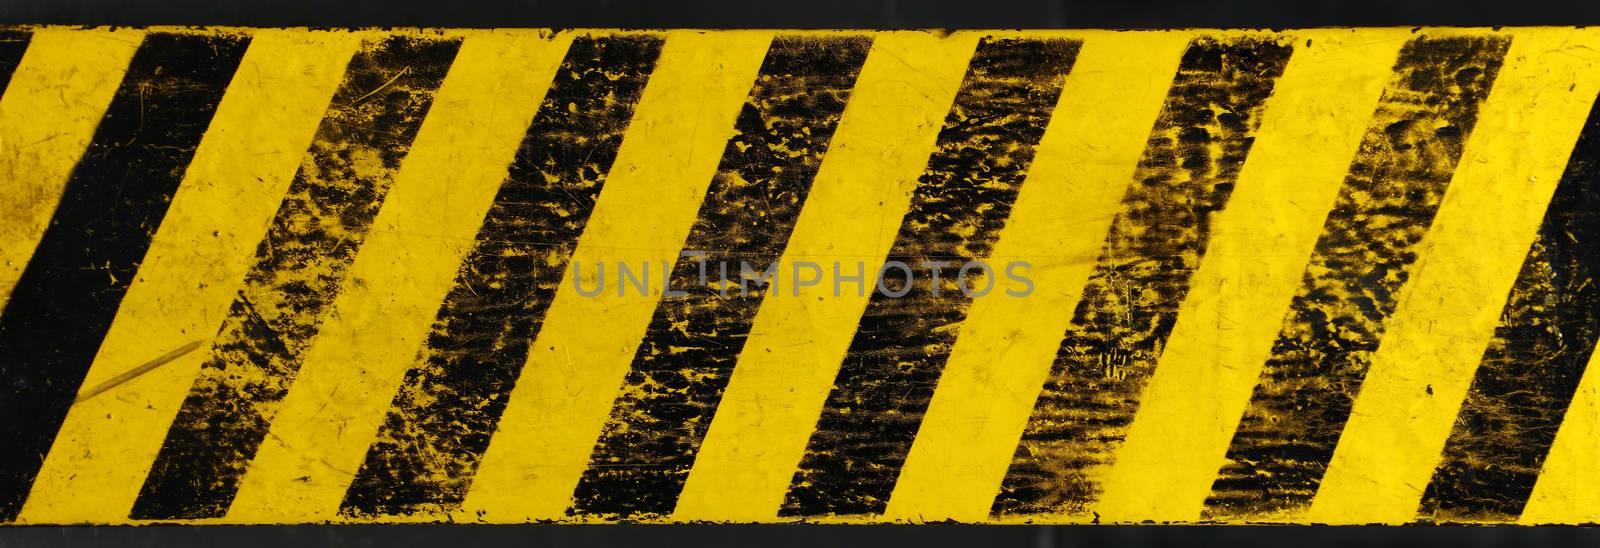 Yellow background with black grunge hazard sign by BreakingTheWalls